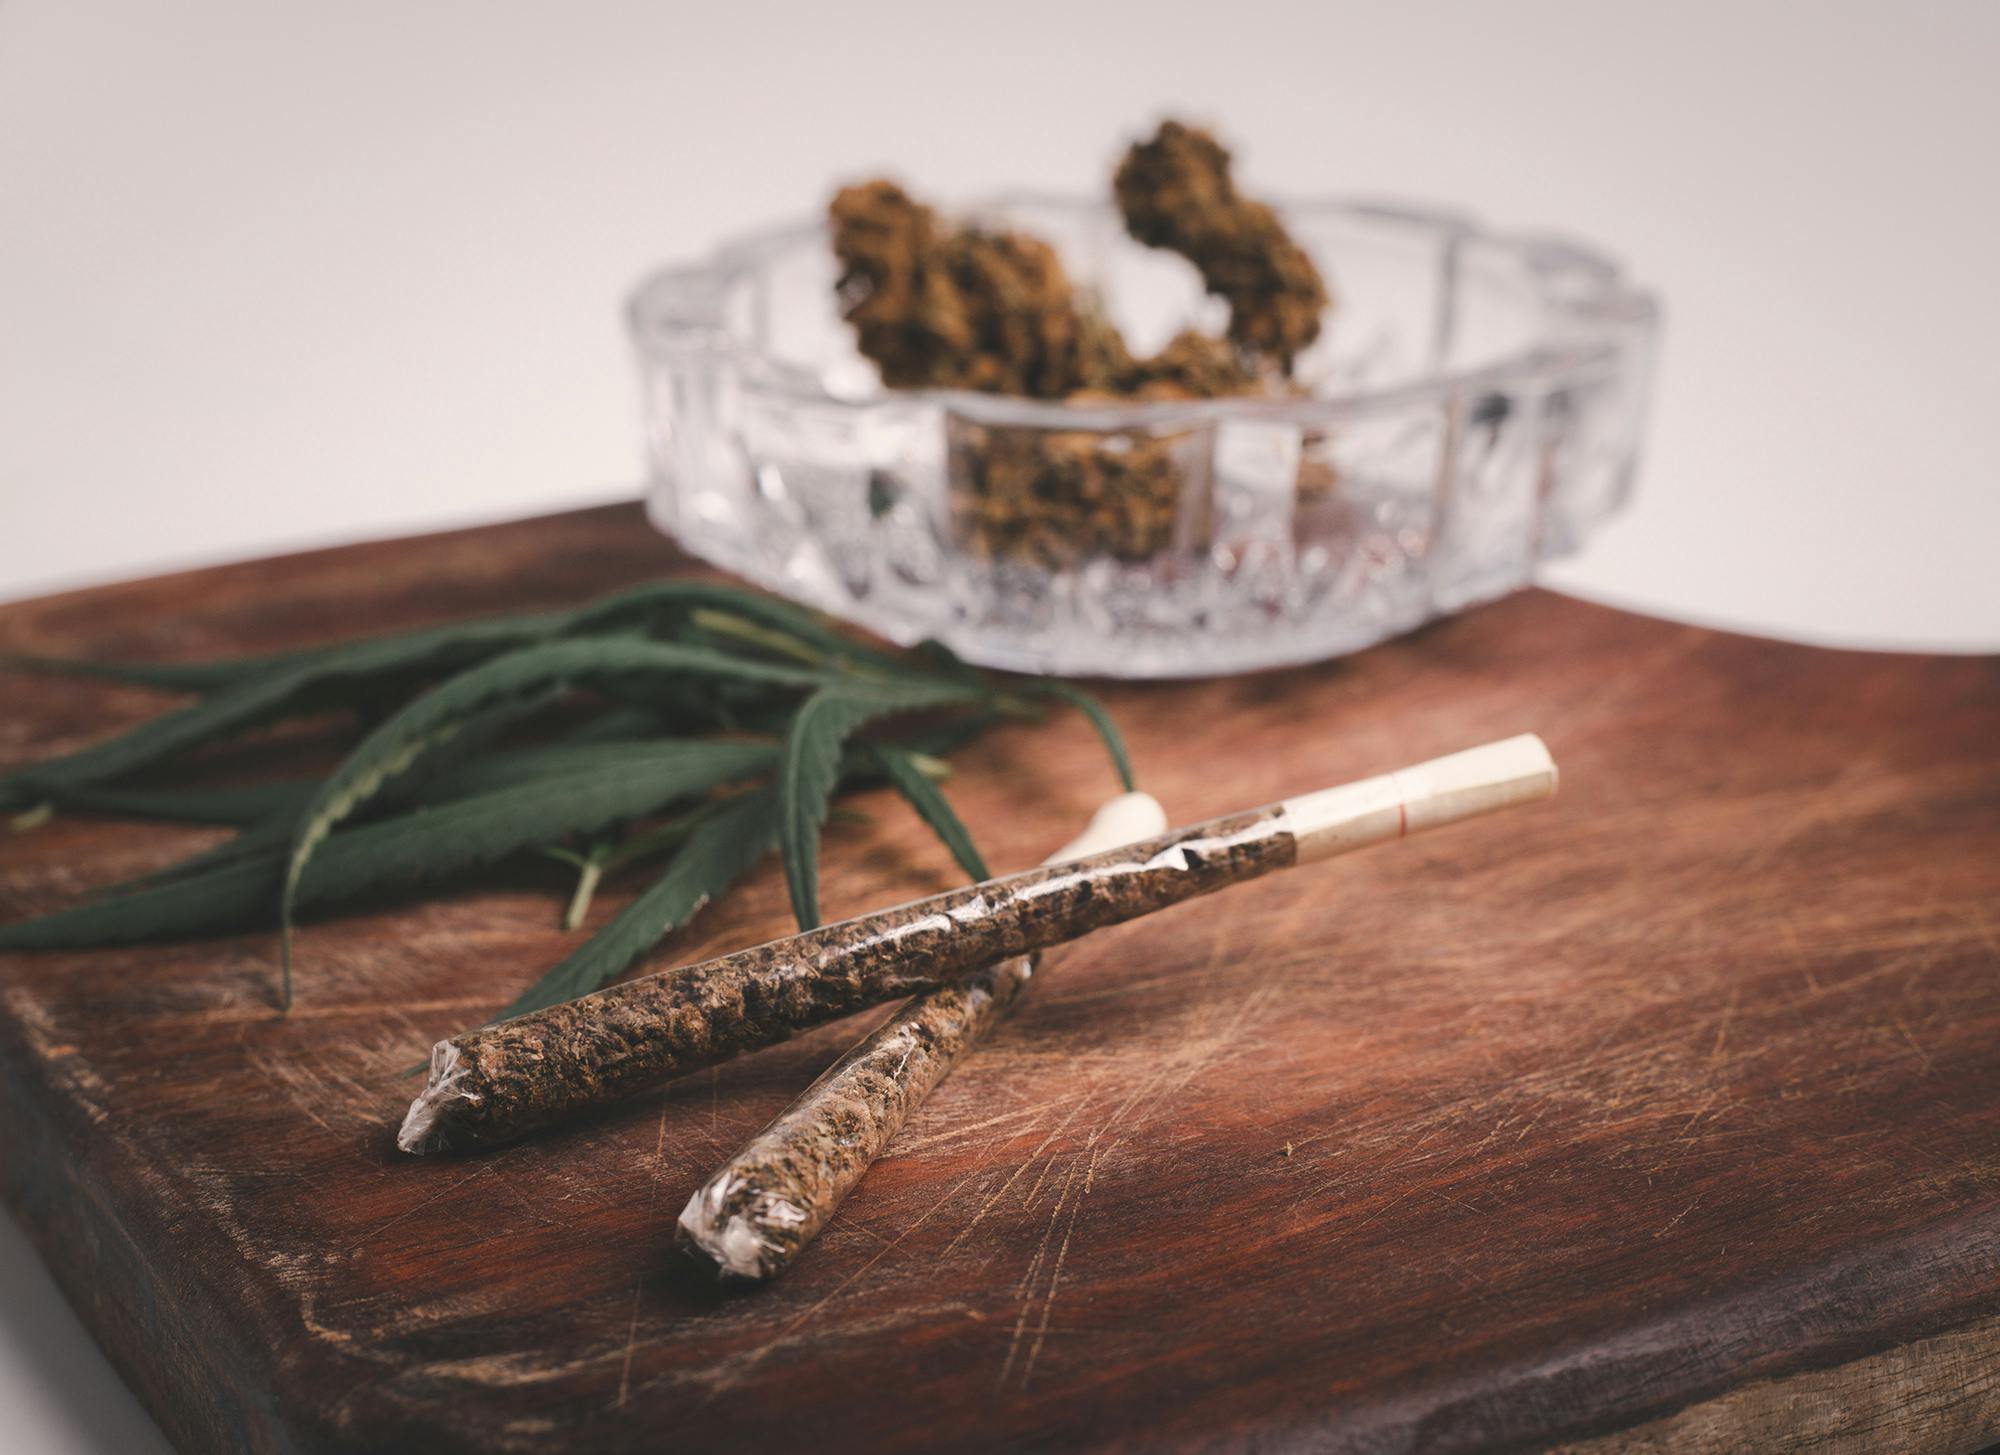 Rolled CBD medicinal marijuana and flower on wood background